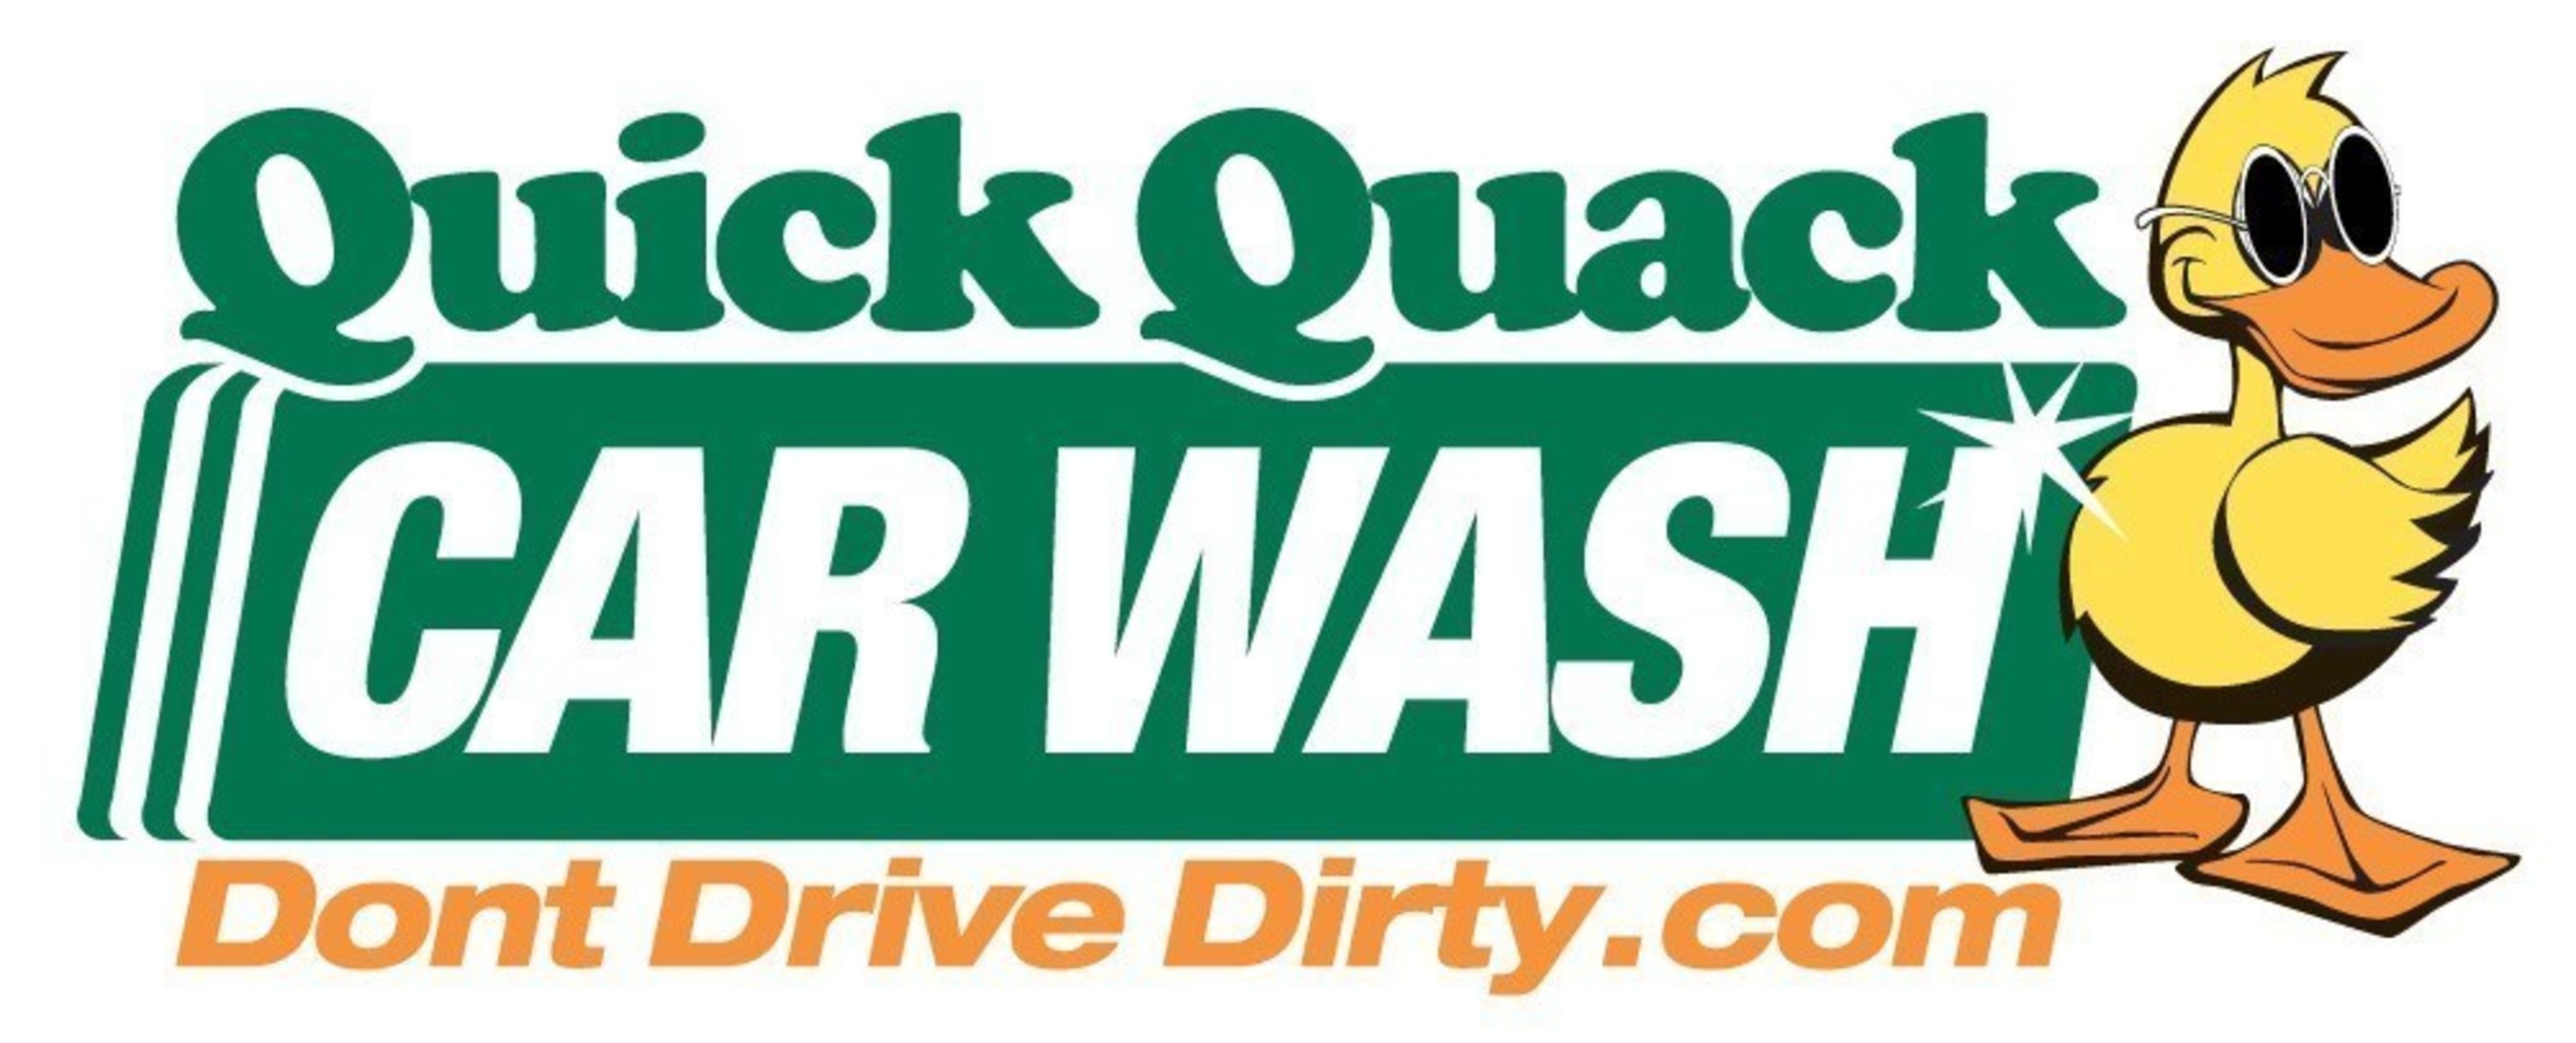 Quick Quack Car Wash - DontDriveDirty.com